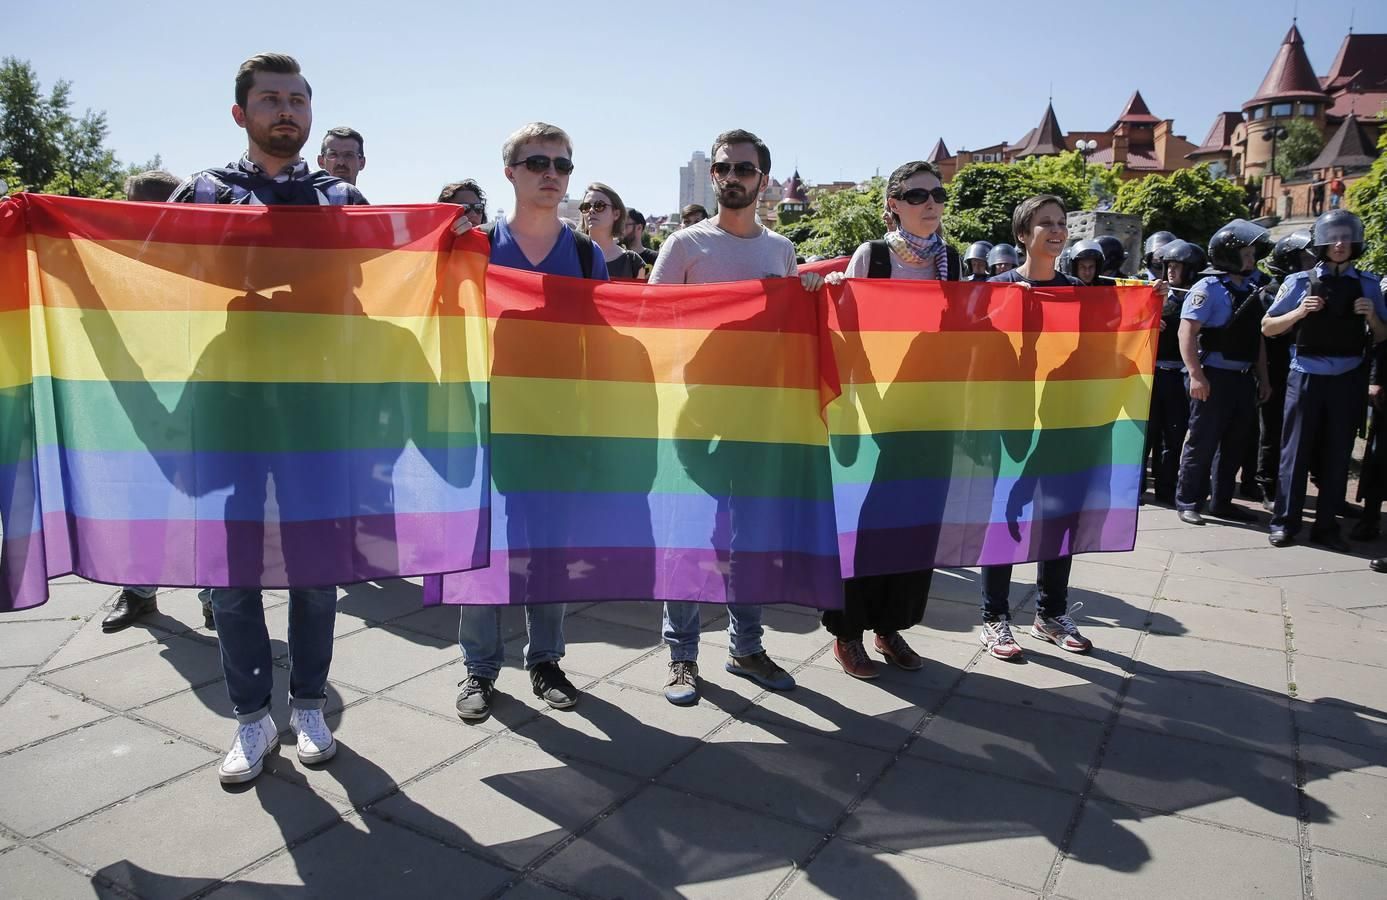 На Гройсмана давит консервативное лобби по защите прав ЛГБТ-сообщества, – активист